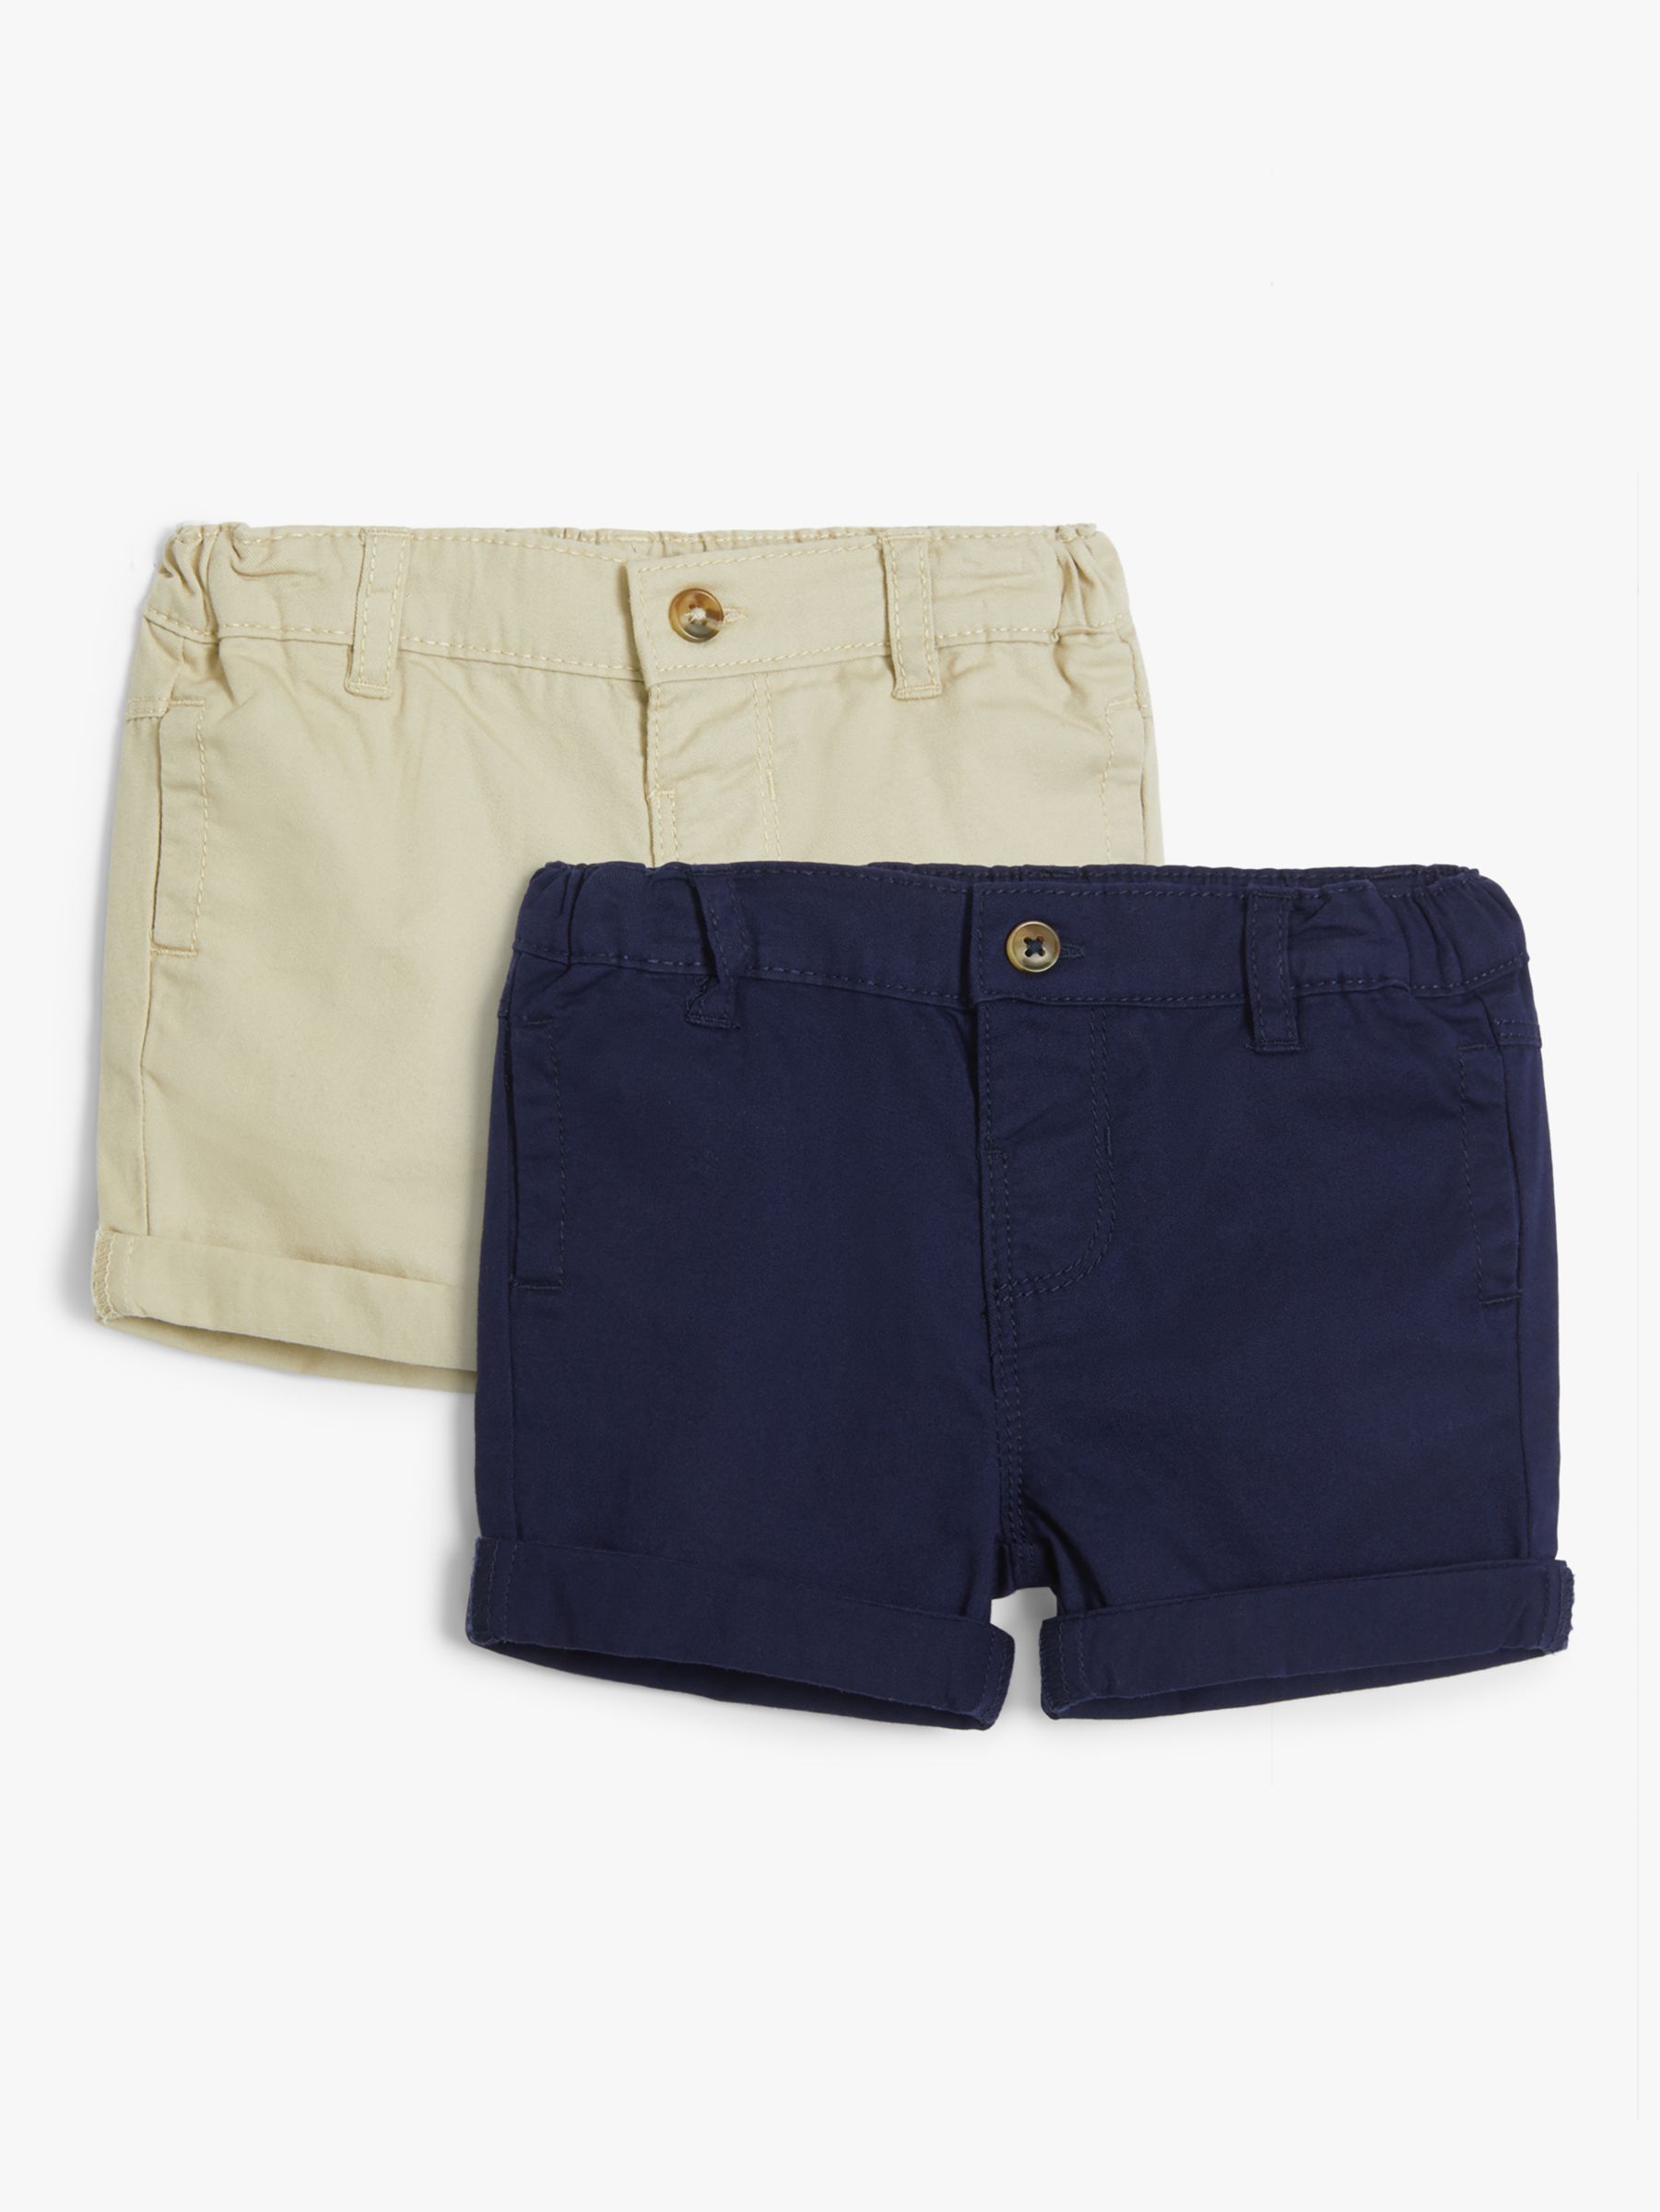 John Lewis Baby Organic Cotton Twill Shorts, Pack of 2, Stone/Navy